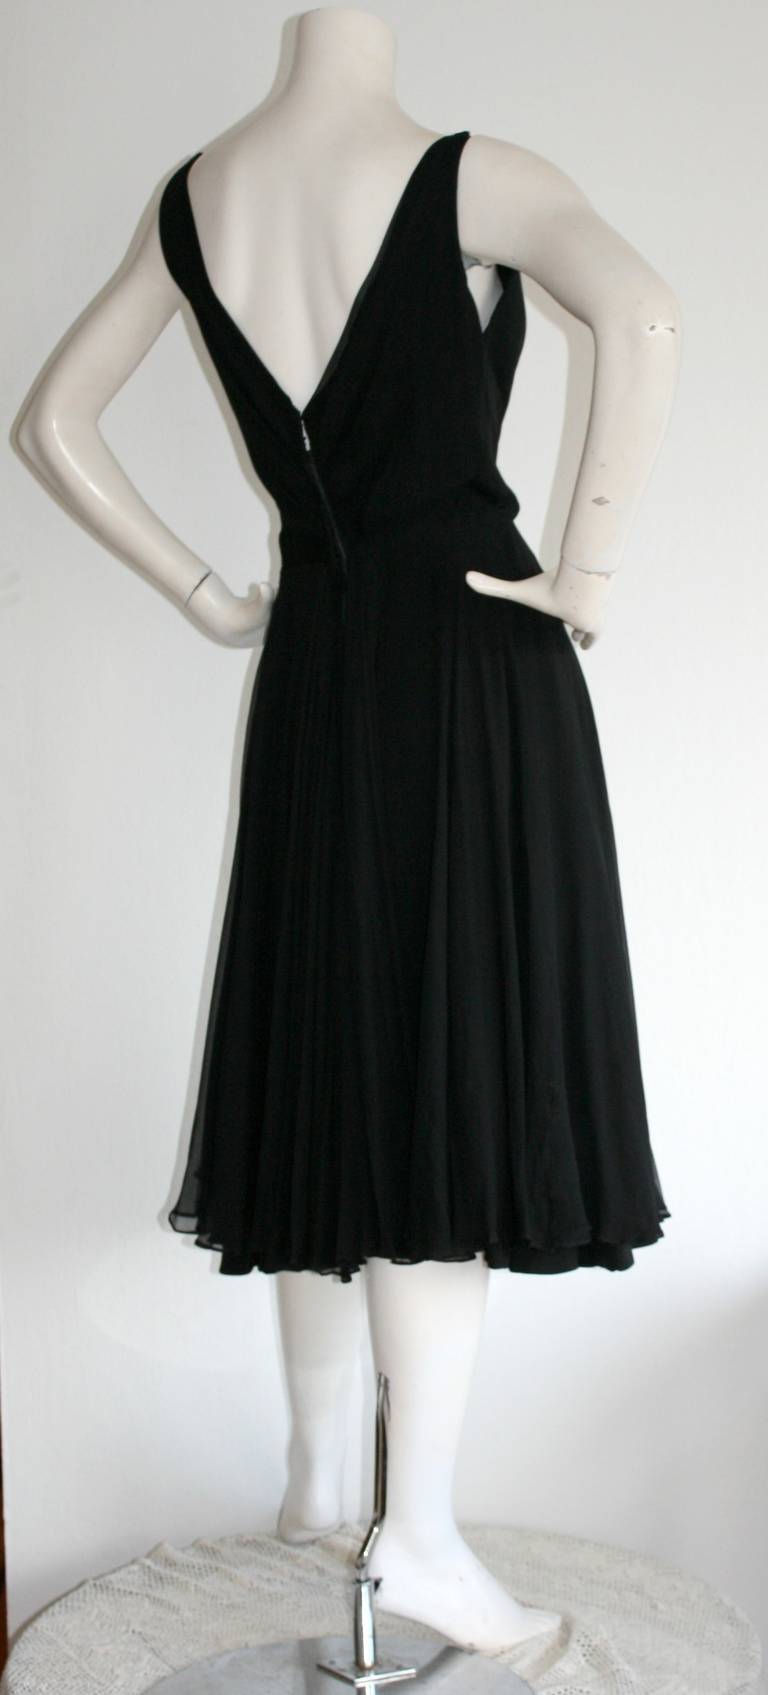 Women's Spectacular I. Magnin 1950s Black Chiffon Dress Perfect Little Black Dress